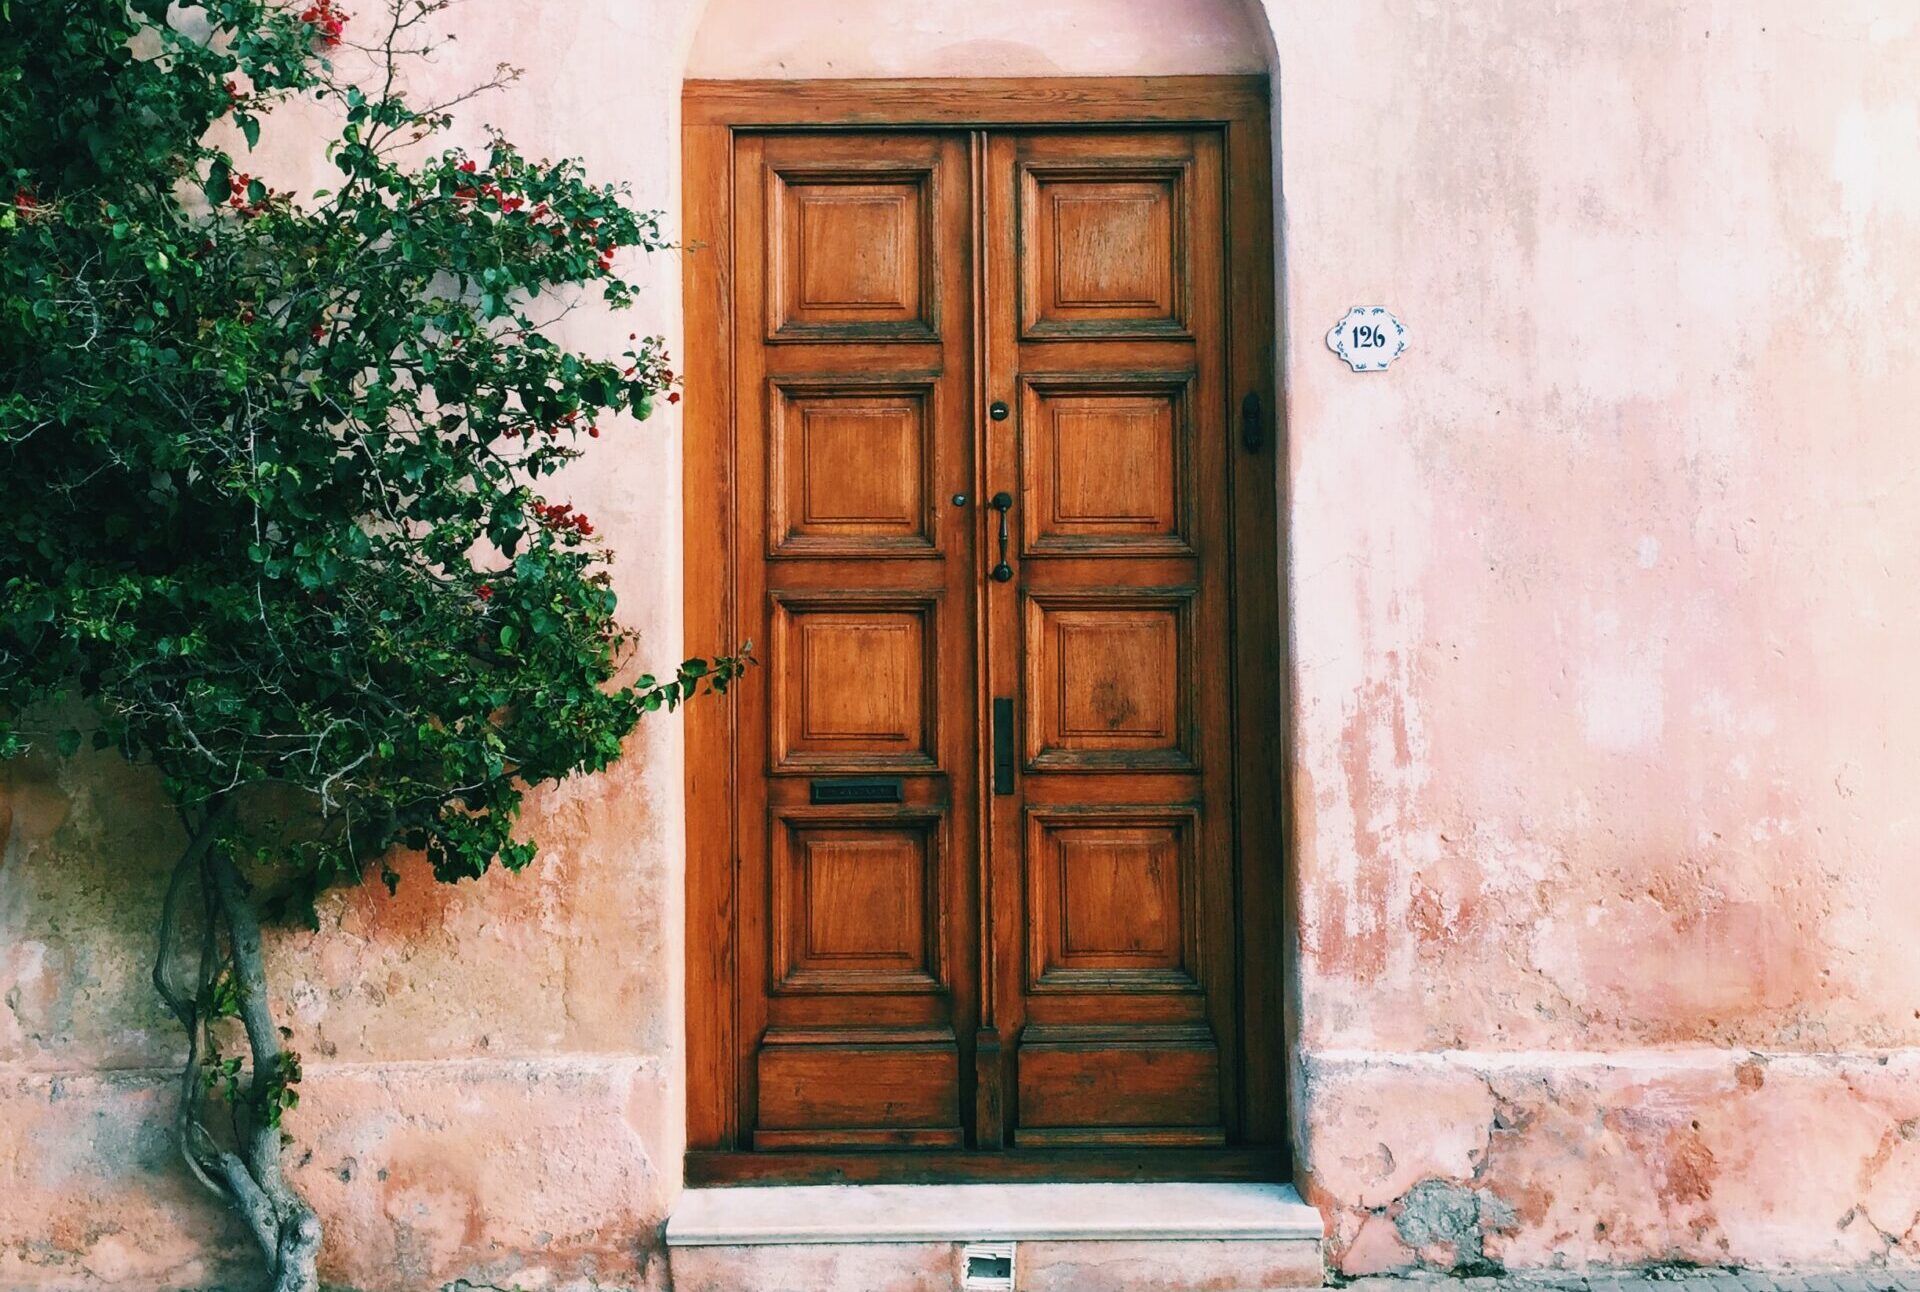 Do you think religion should be shared door to door?